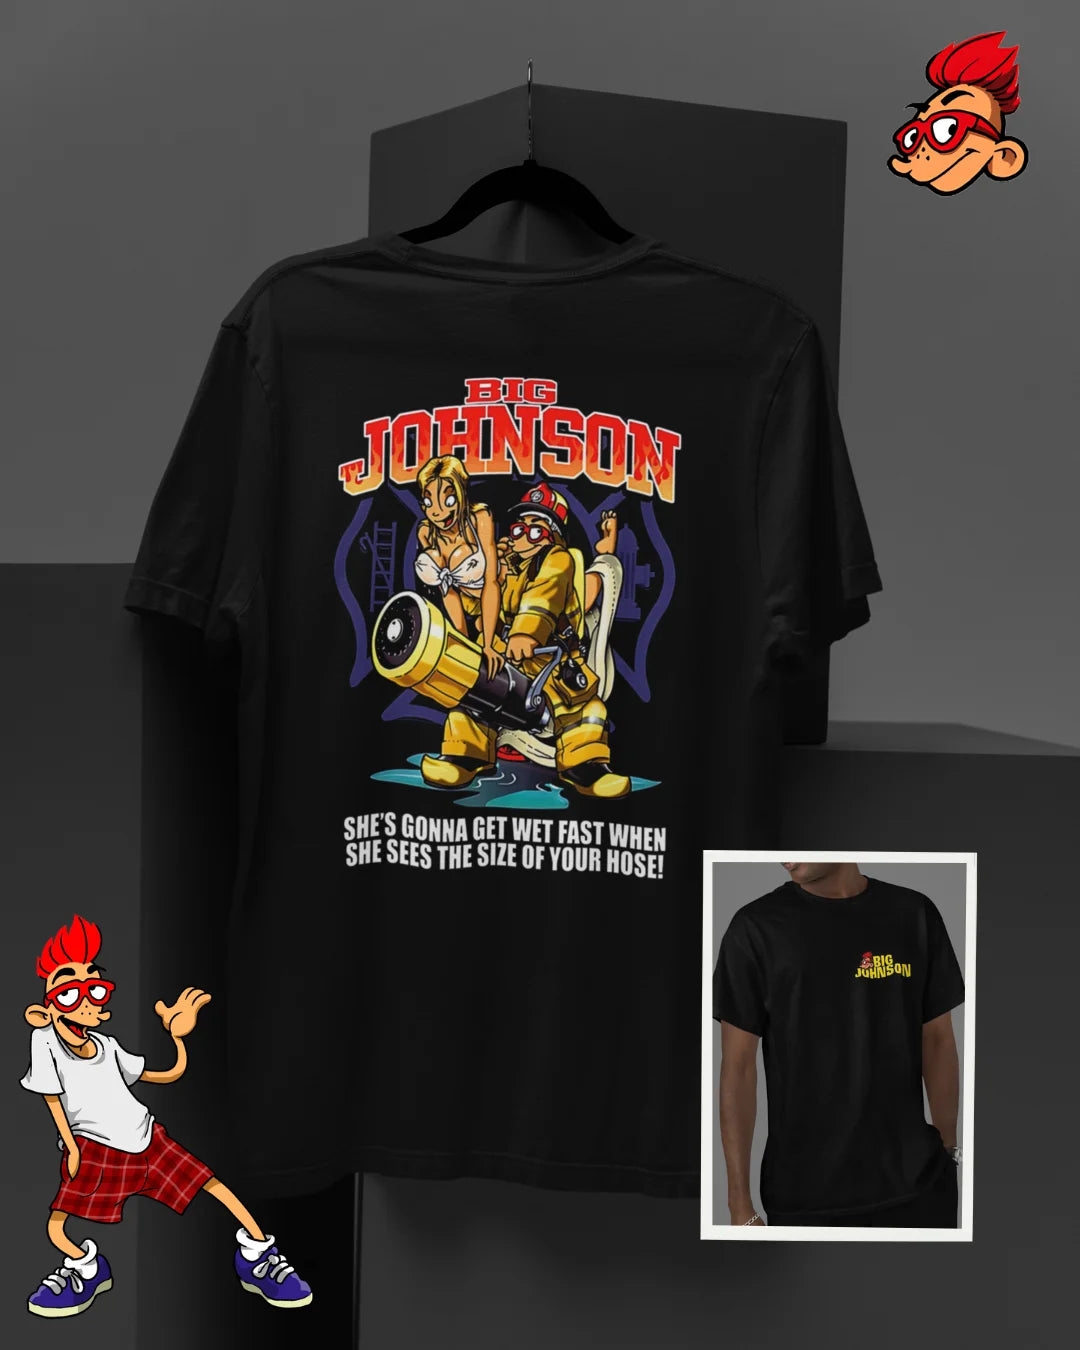 Camiseta Algodão Premium Big Johnson - Fireman